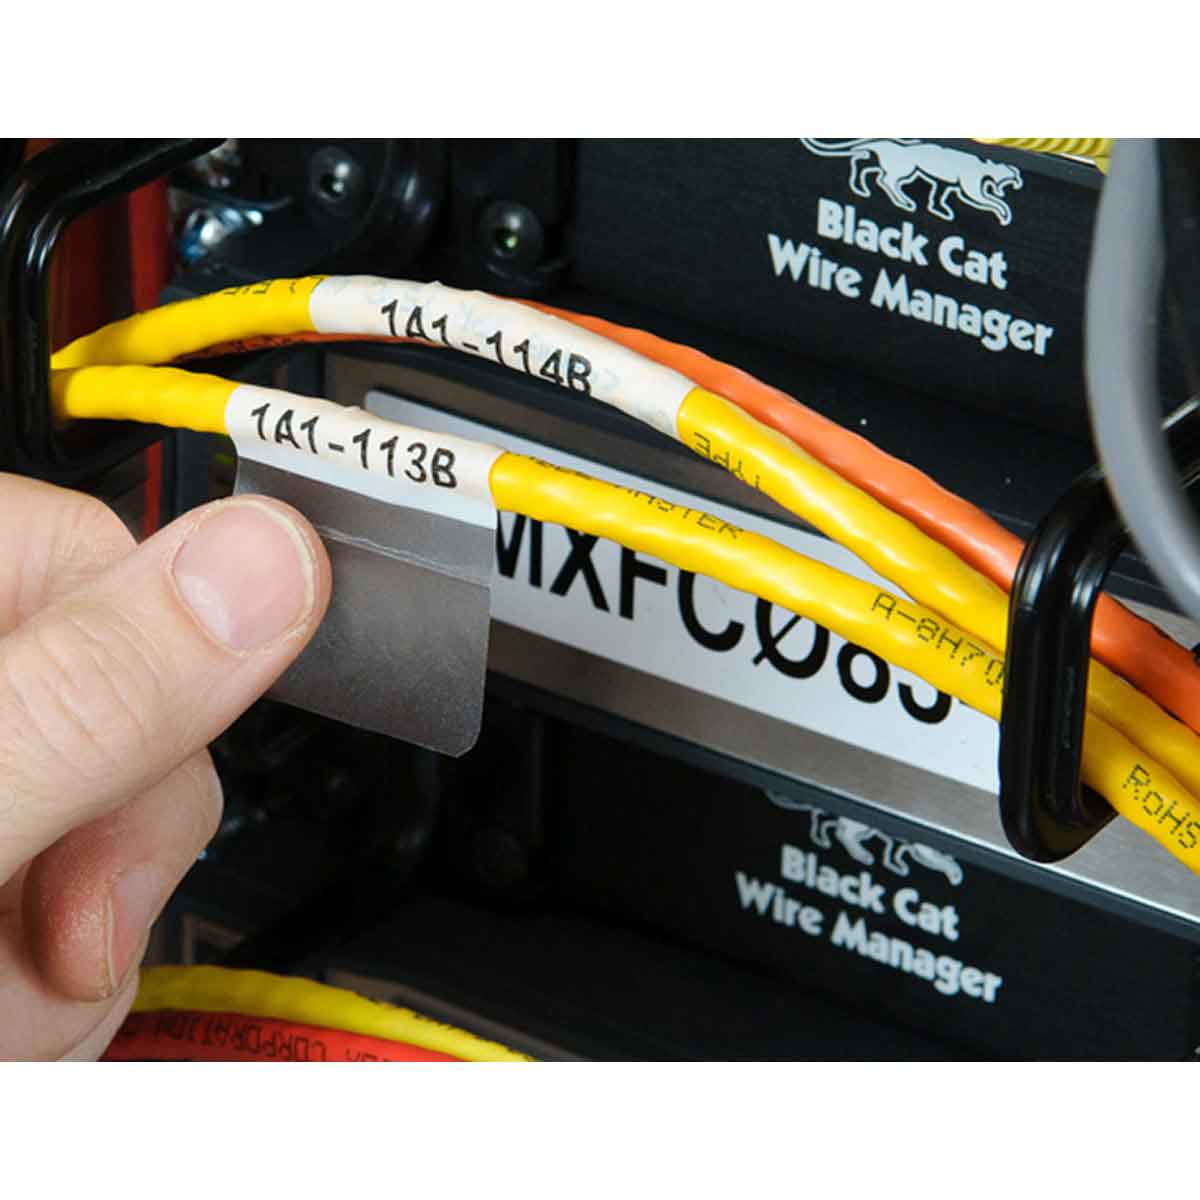 Etiquetas envolventes para cables y alambres - 1 x 1 # EBA-29NOT